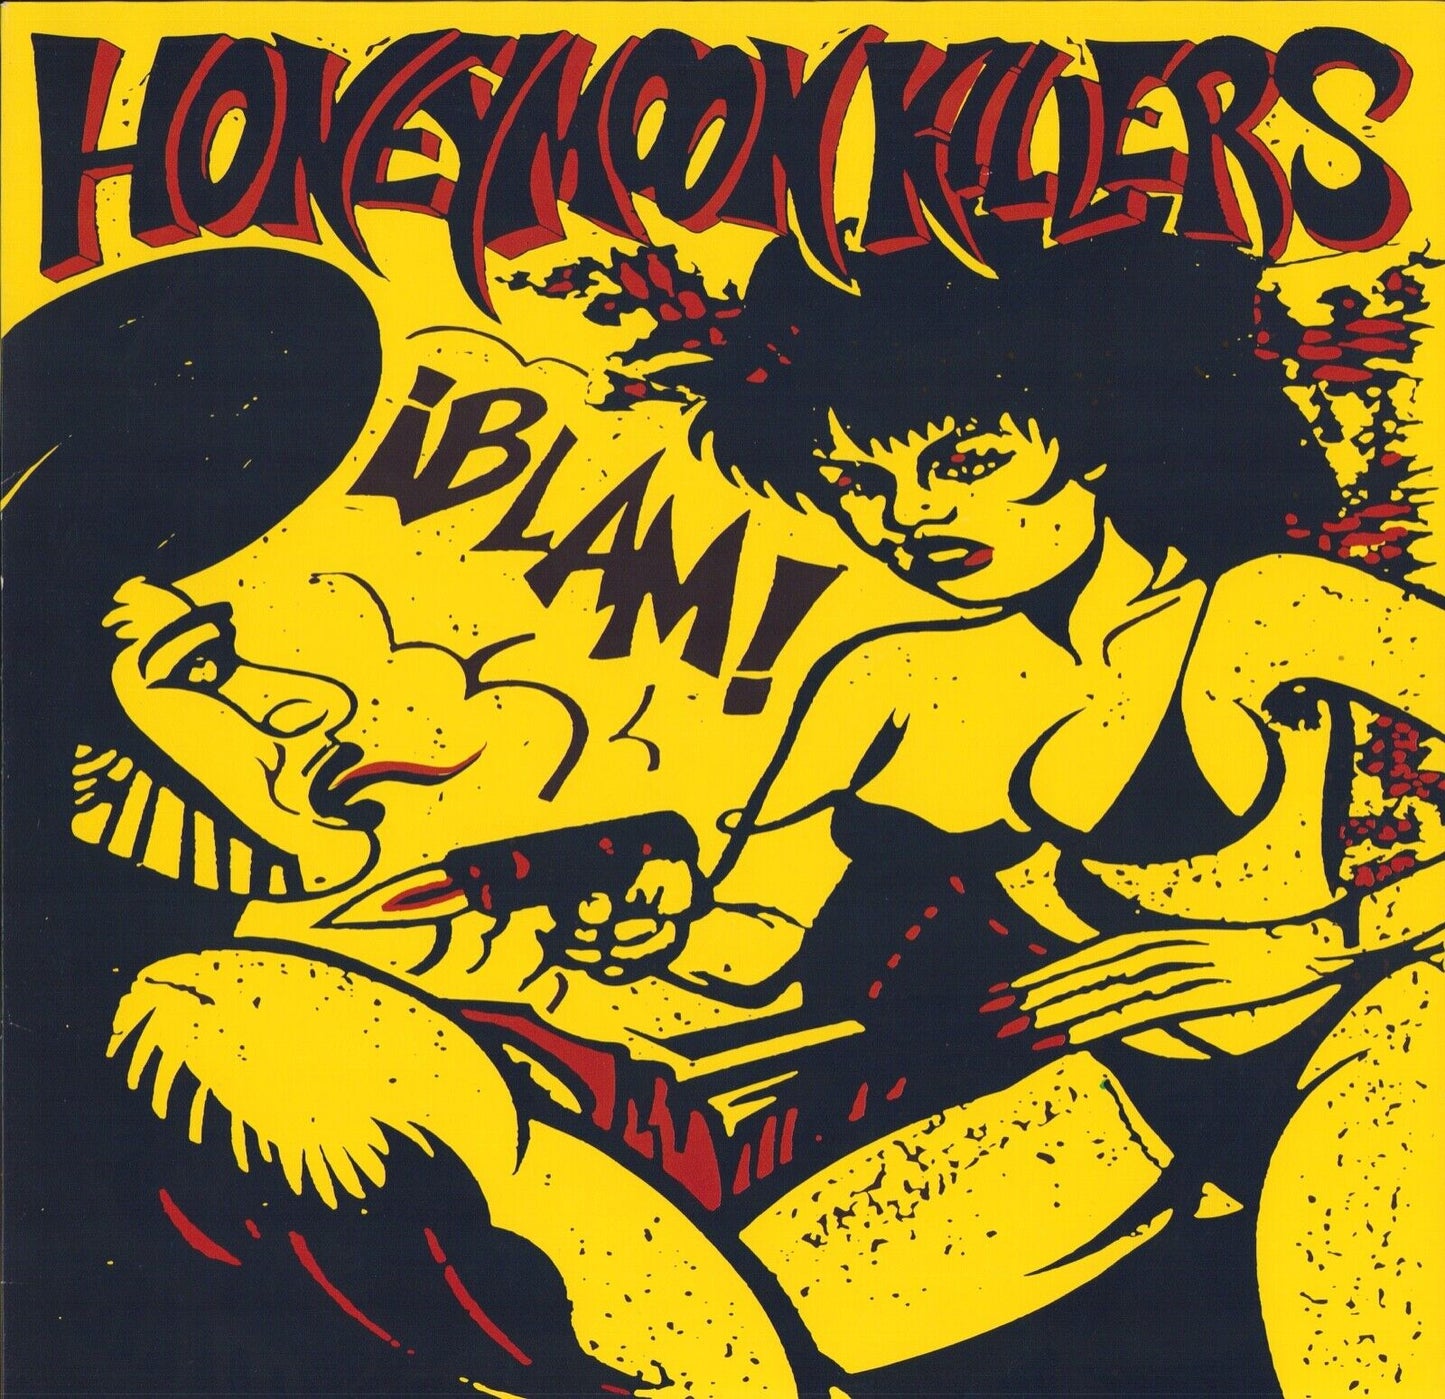 The Honeymoon Killers - 'Til Death Do Us Part Vinyl LP